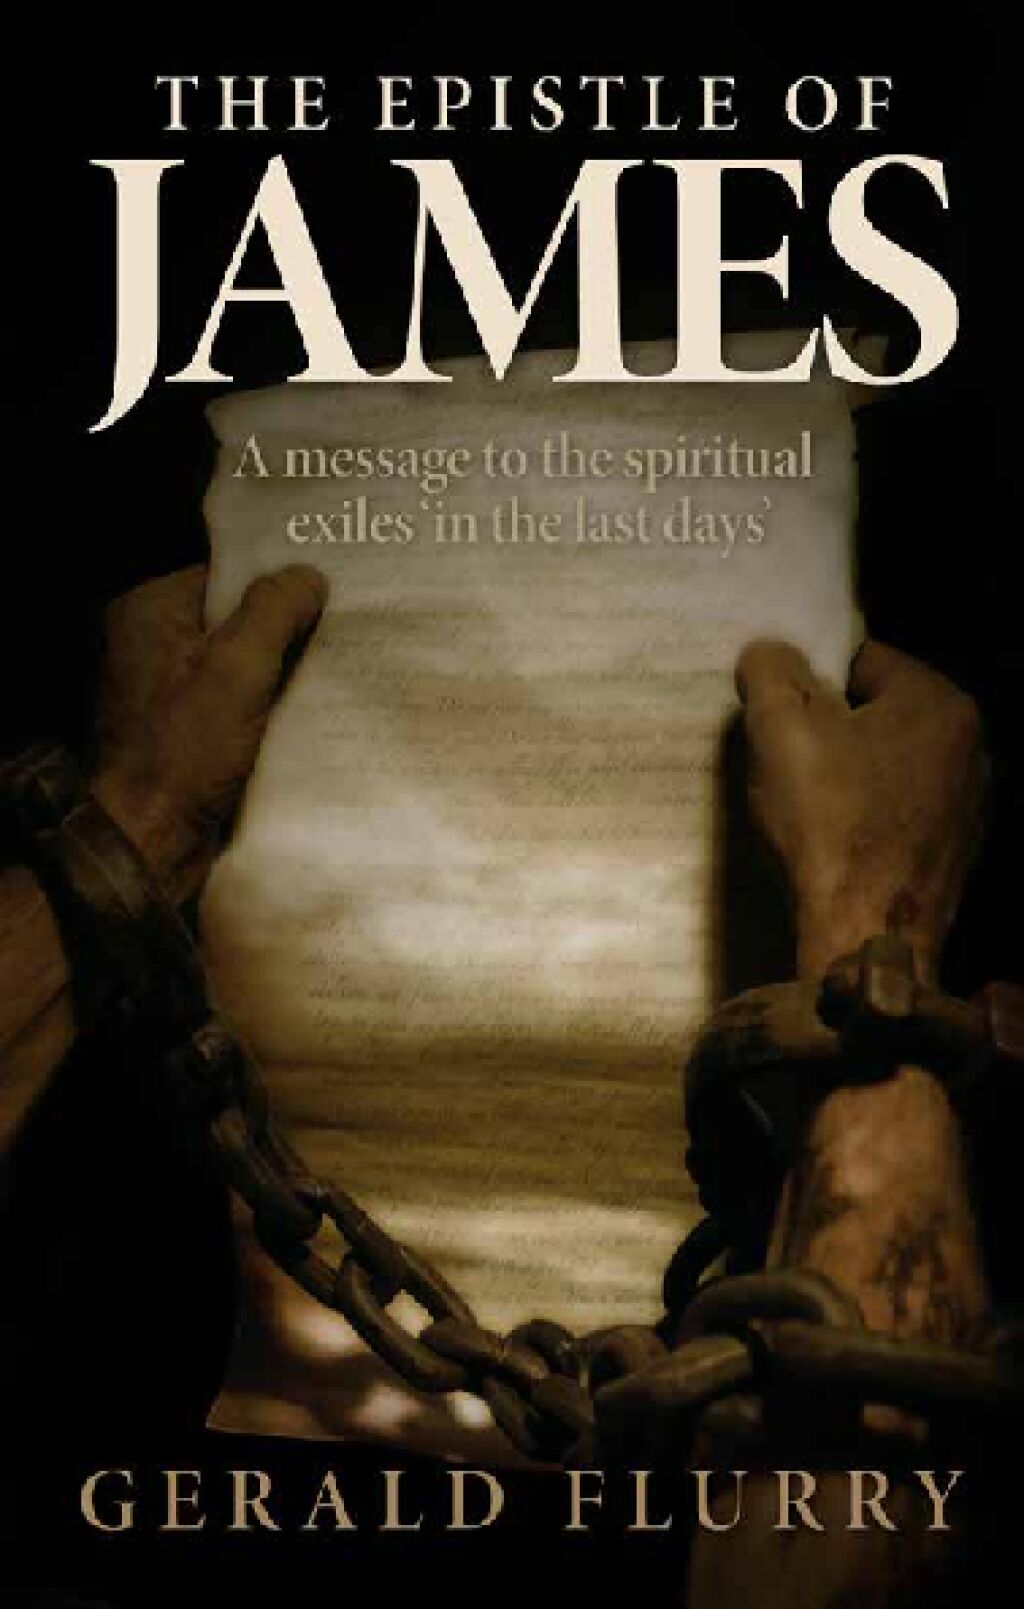 The Epistle of James | theTrumpet.com